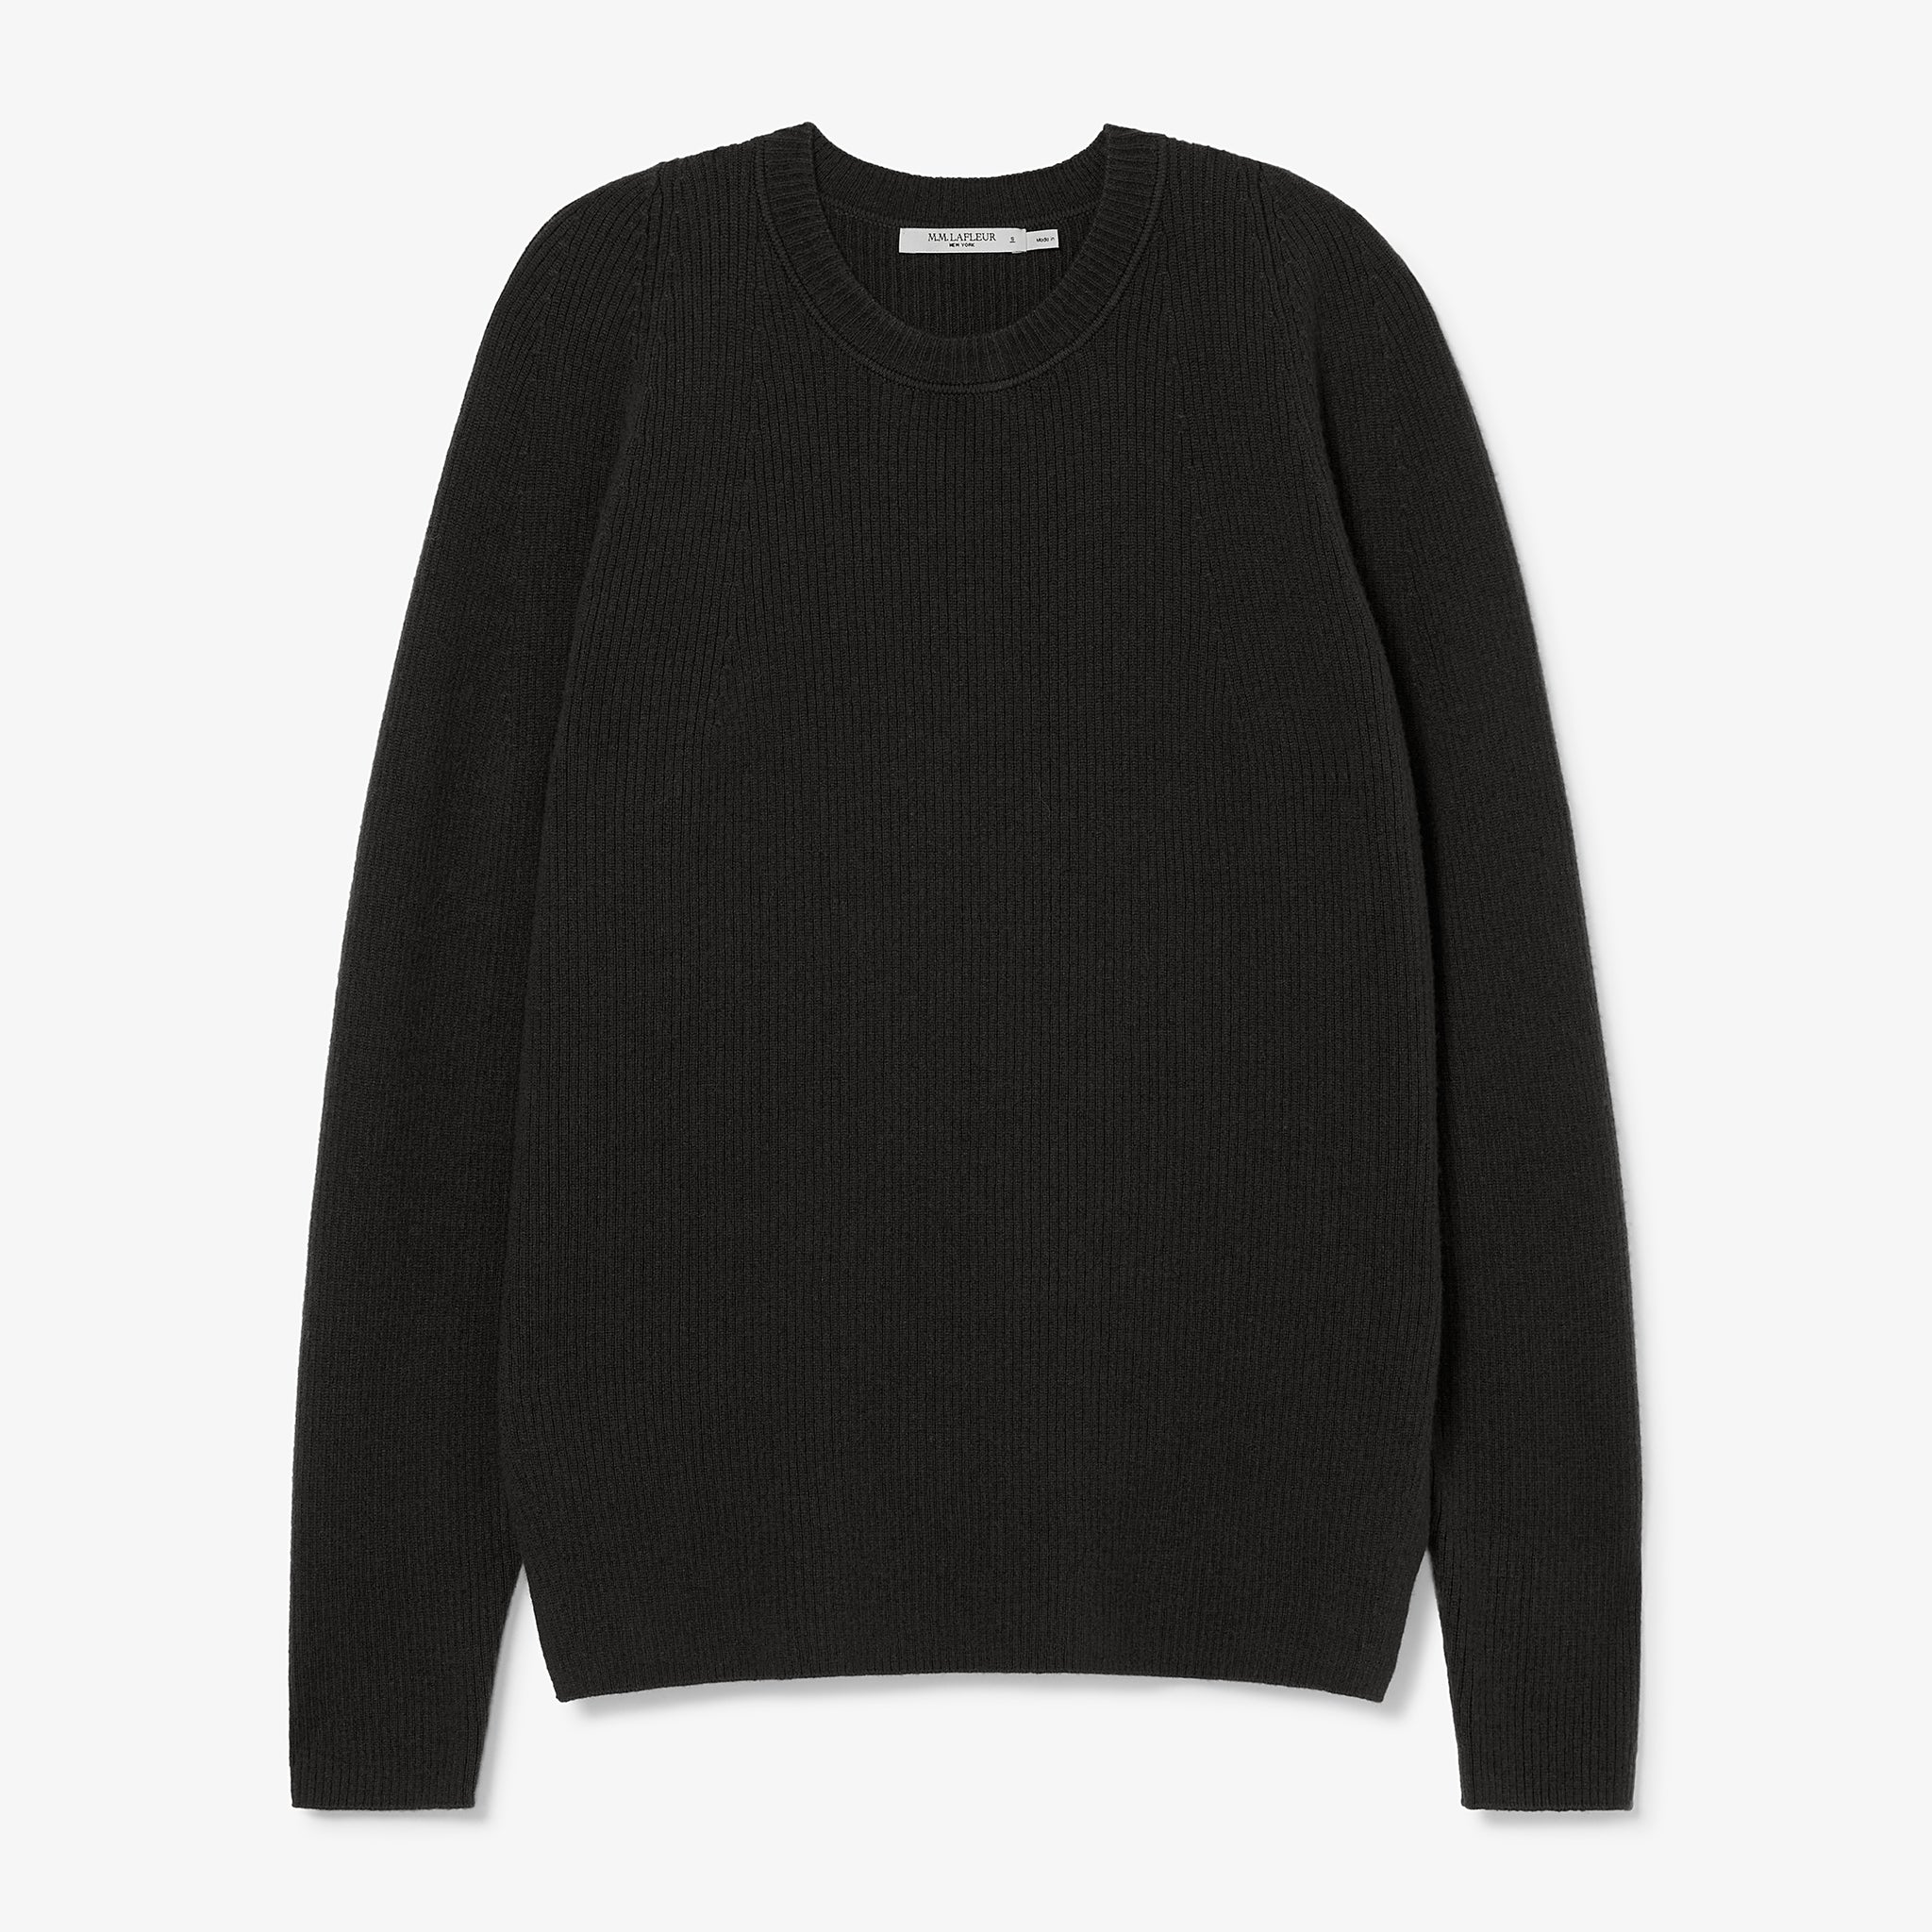 Packshot image of the ollie sweater in black